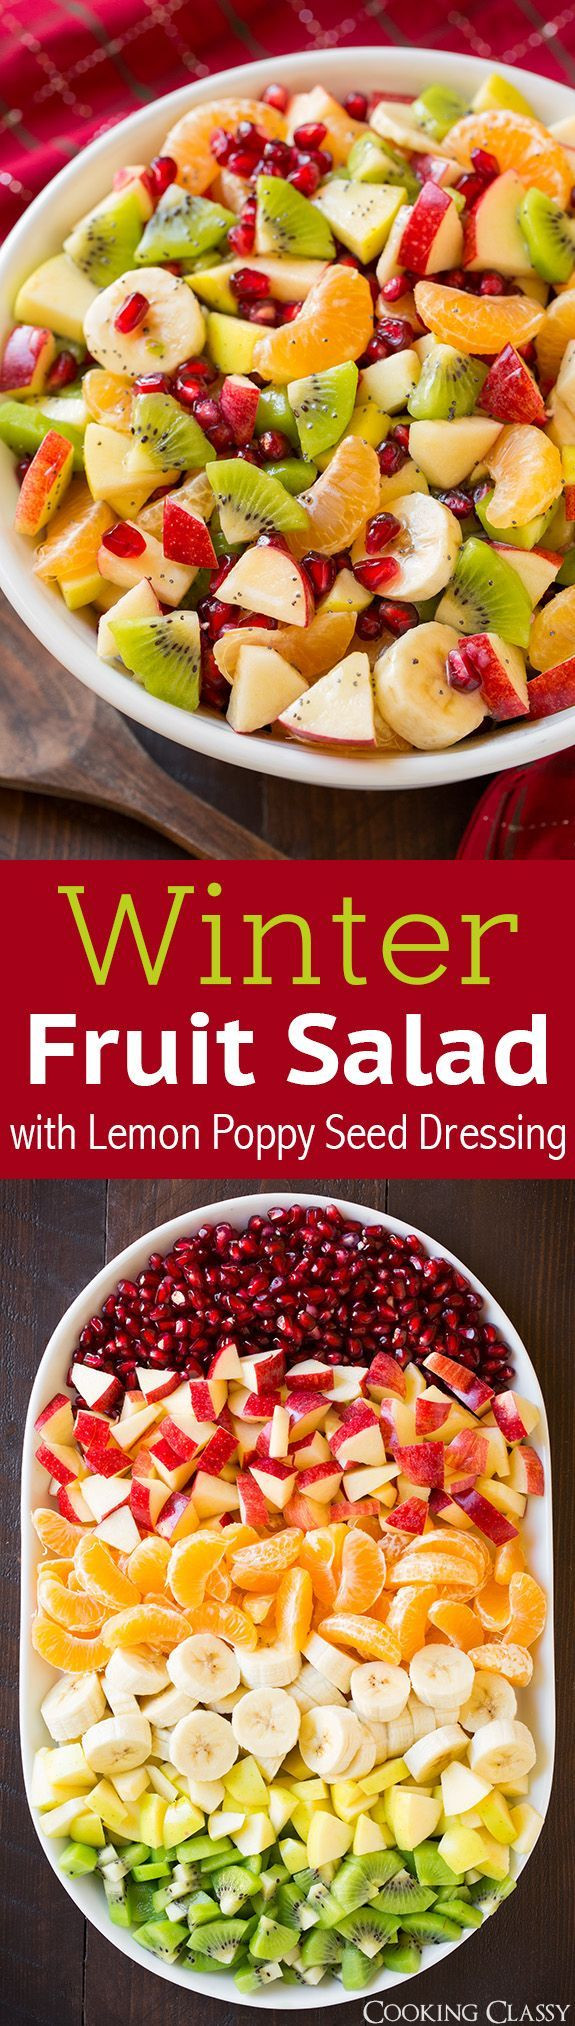 Winter Fruit Salad Ideas
 4 Apples 4 Bananas 4 Kiwis ripe 1 1 2 cup Pomegranate